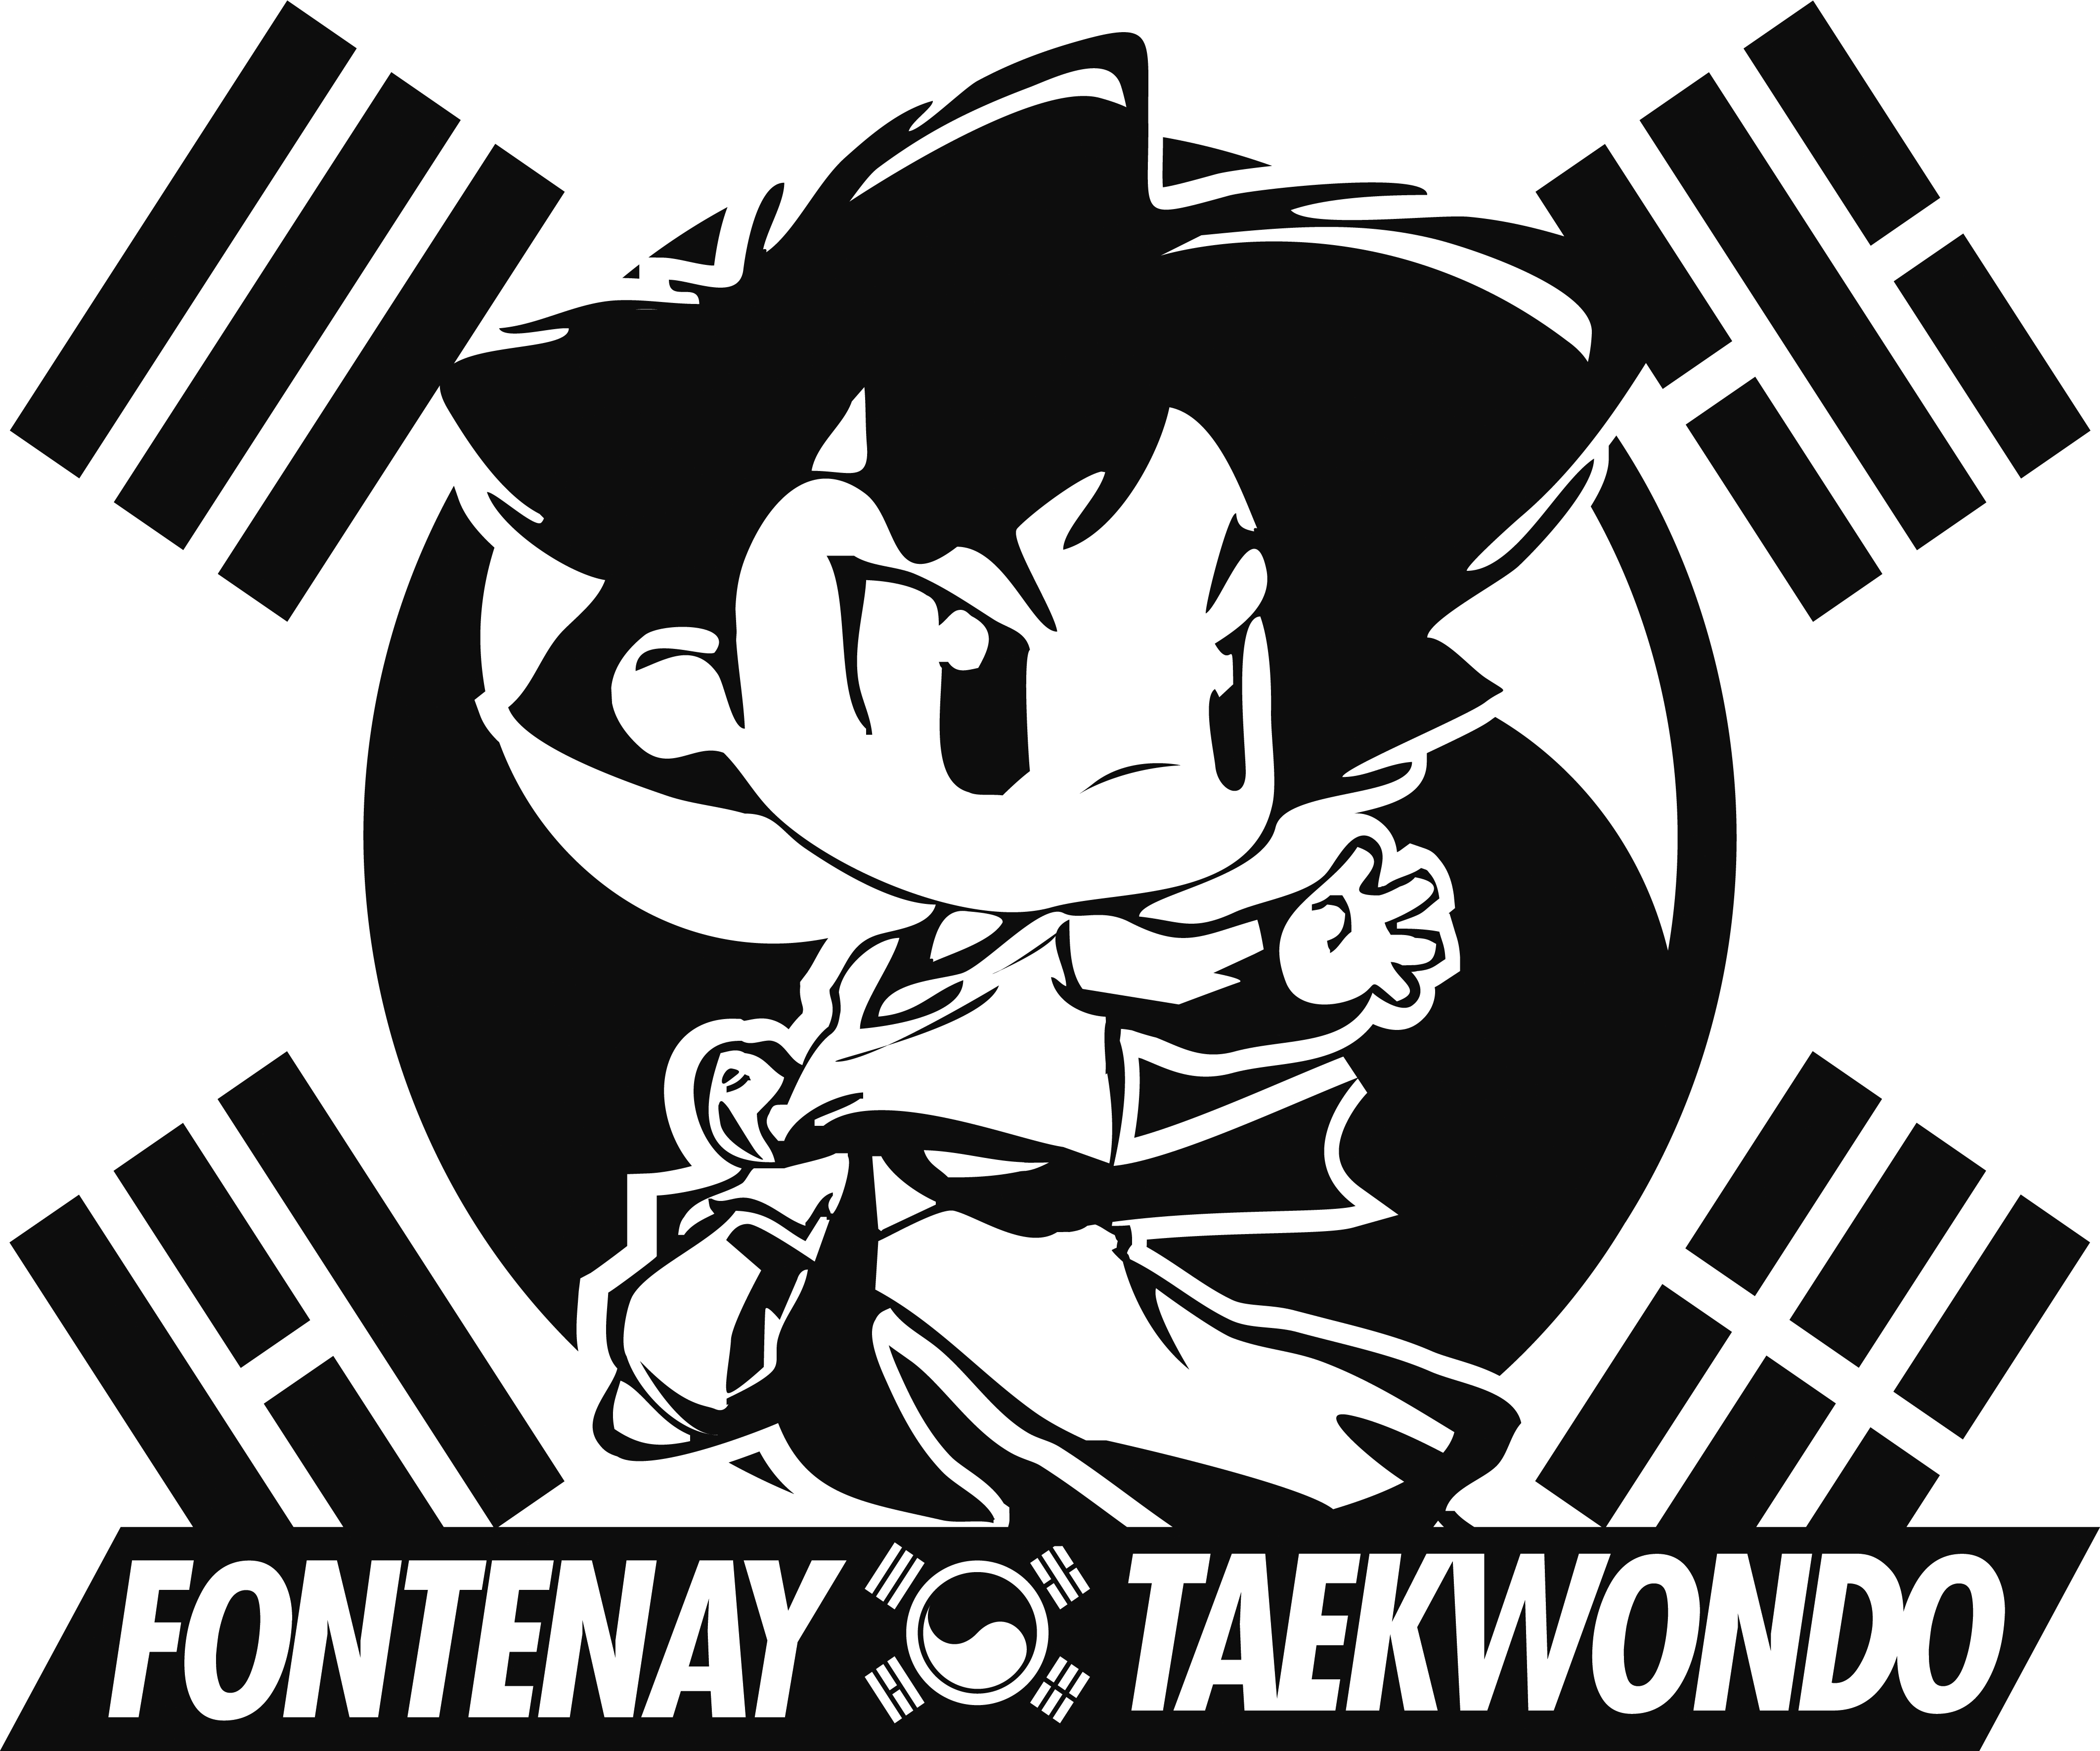 USF Taekwondo Fontenay